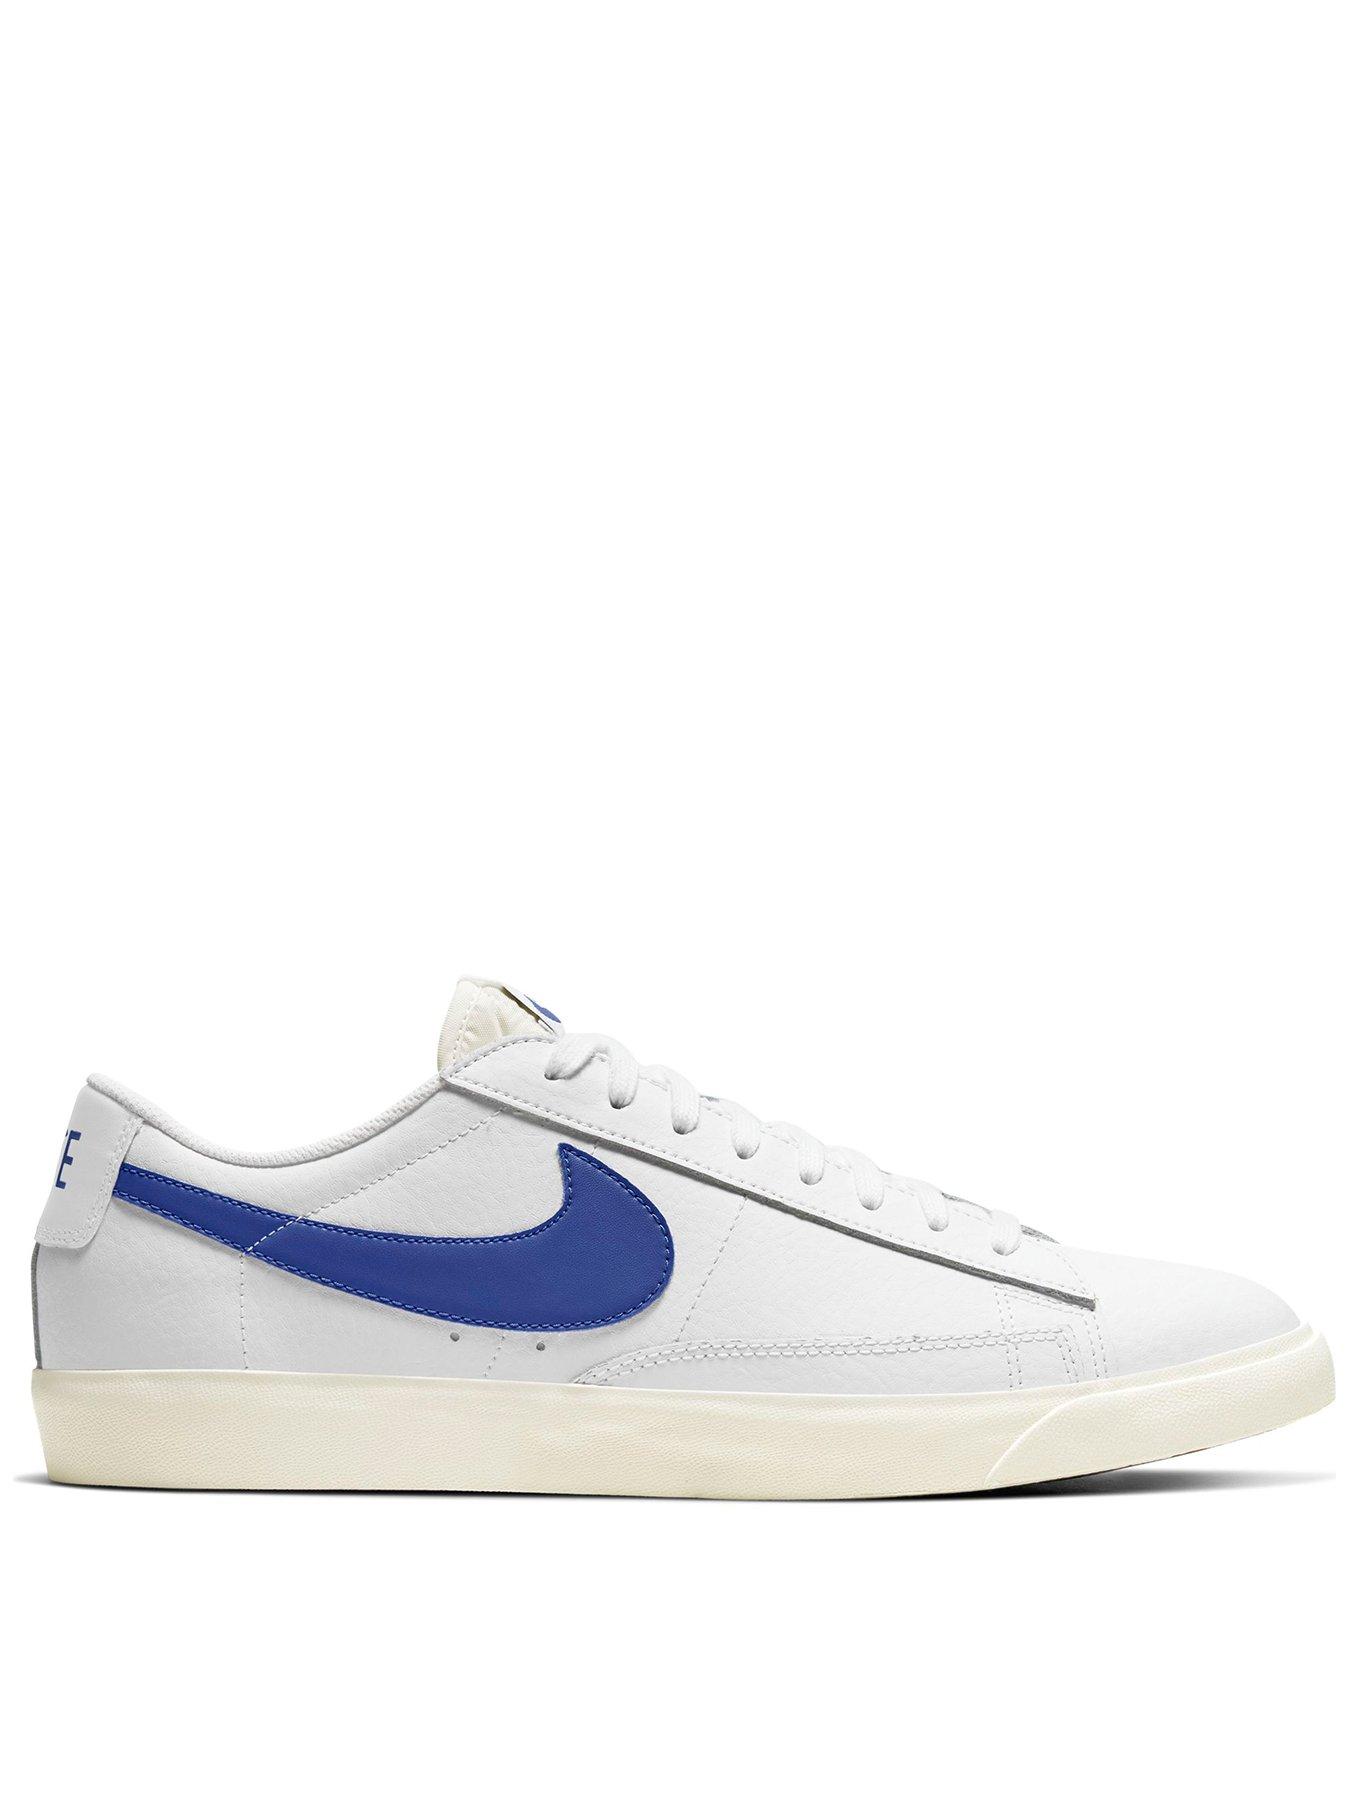 Nike Blazer Low Leather - White/Blue | very.co.uk